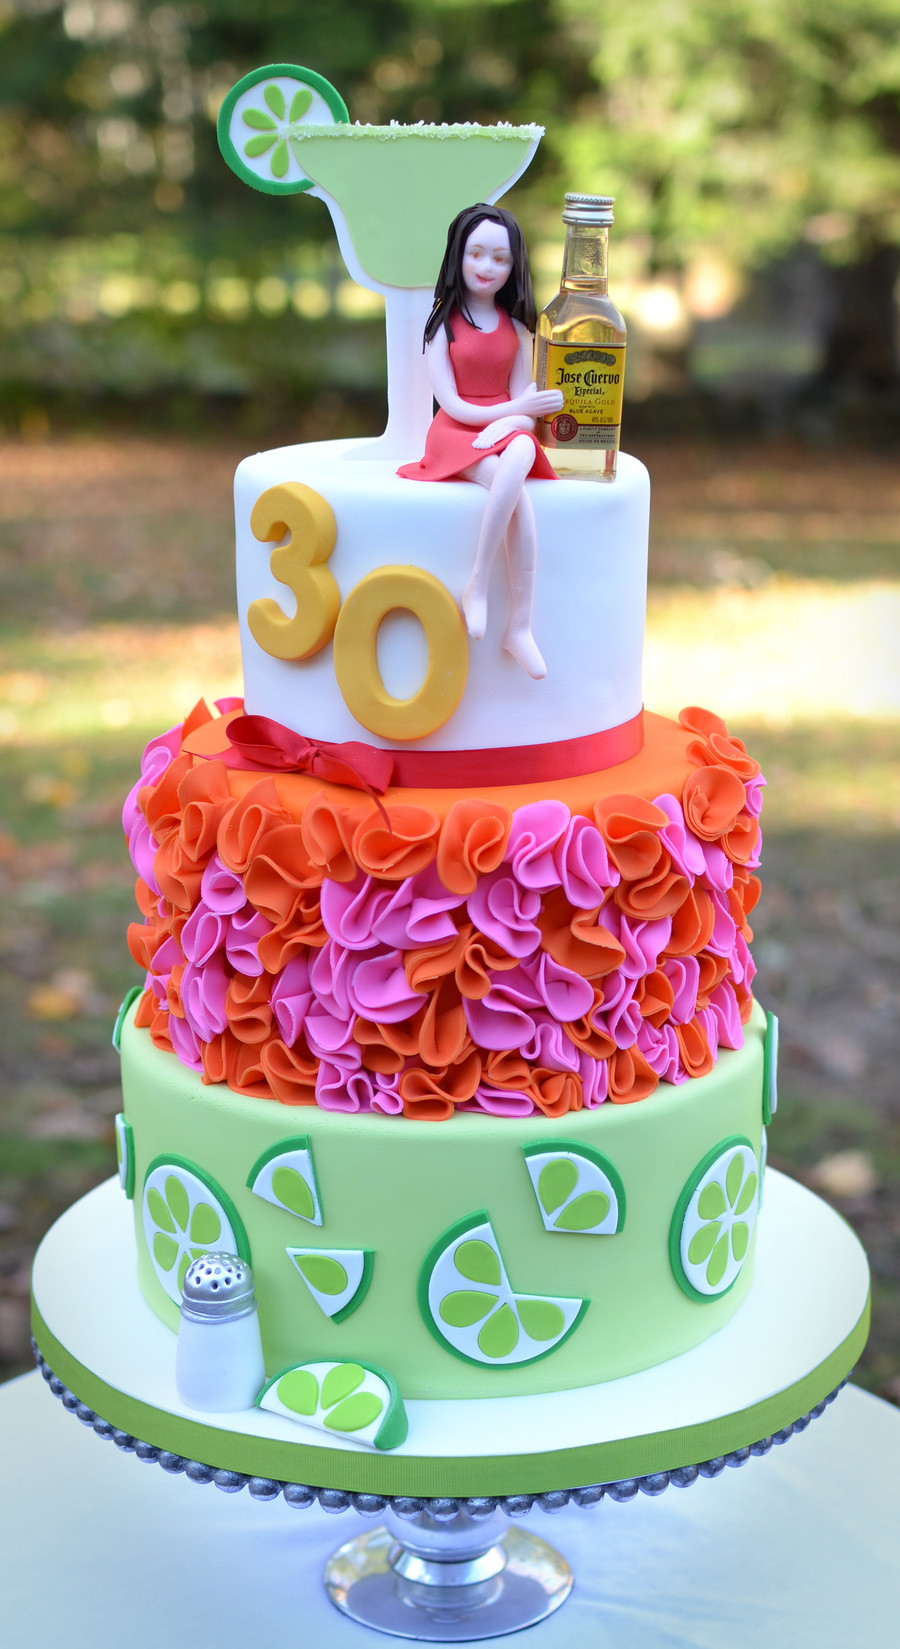 30th Birthday Cake Ideas
 Margarita And Tequila Themed 30Th Birthday Cake